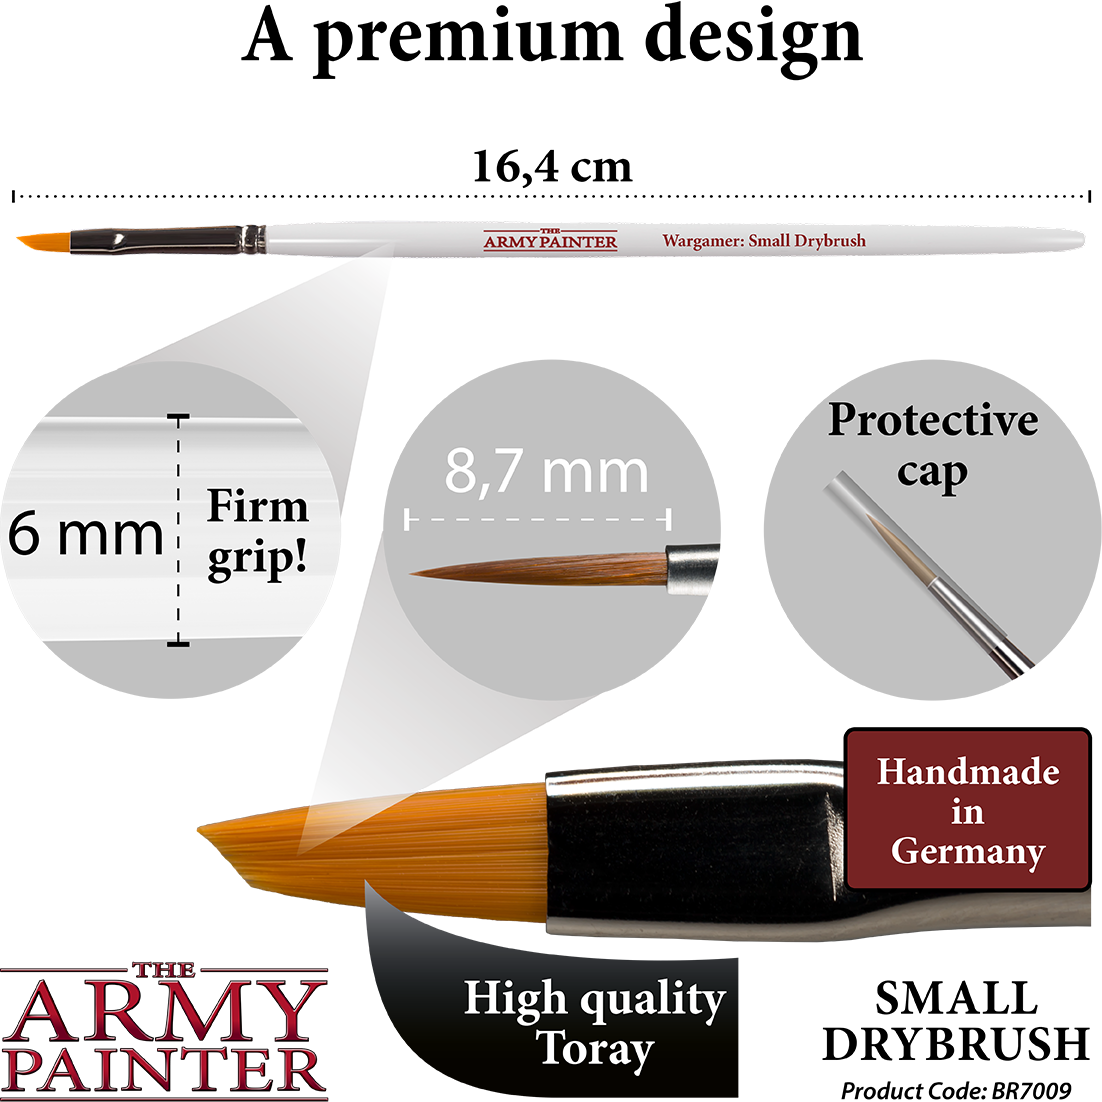 The Army Painter - Wargamer - Small Drybrush